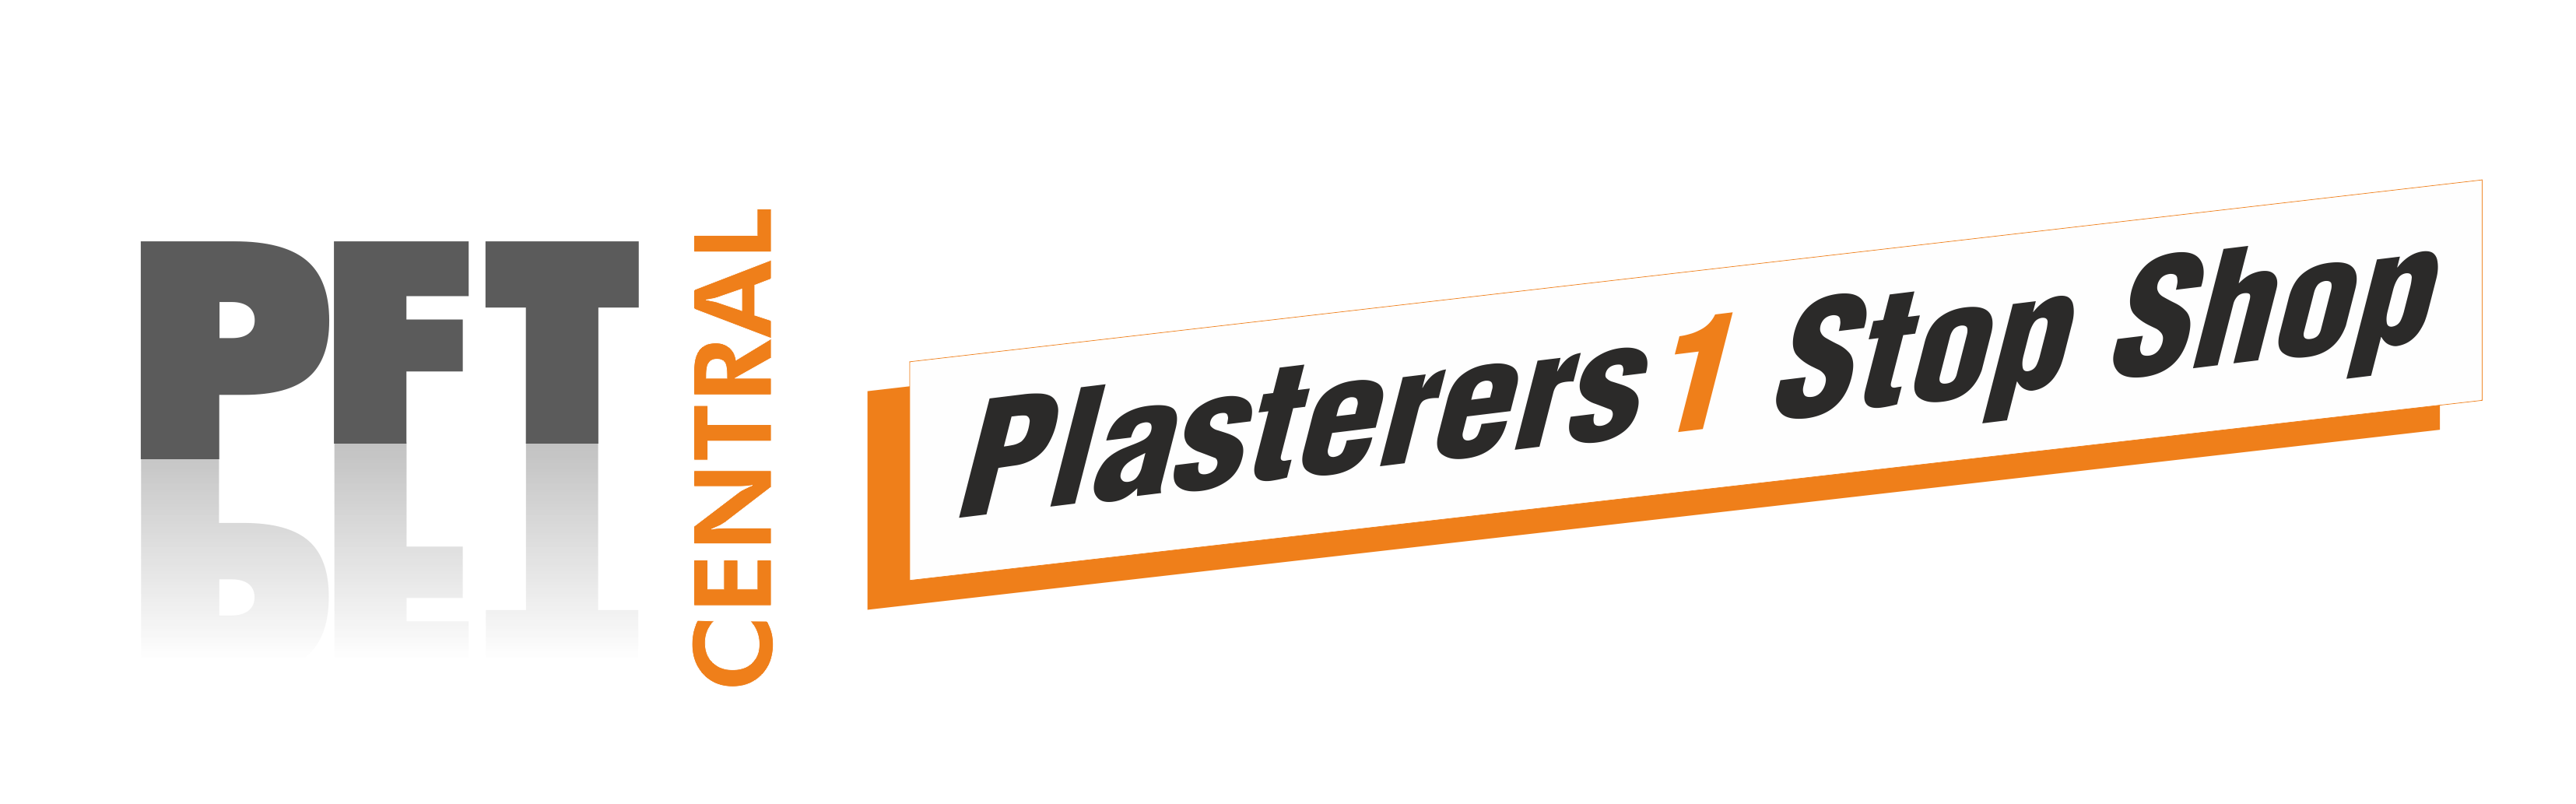 Plasterers 1 Stop Shop.png